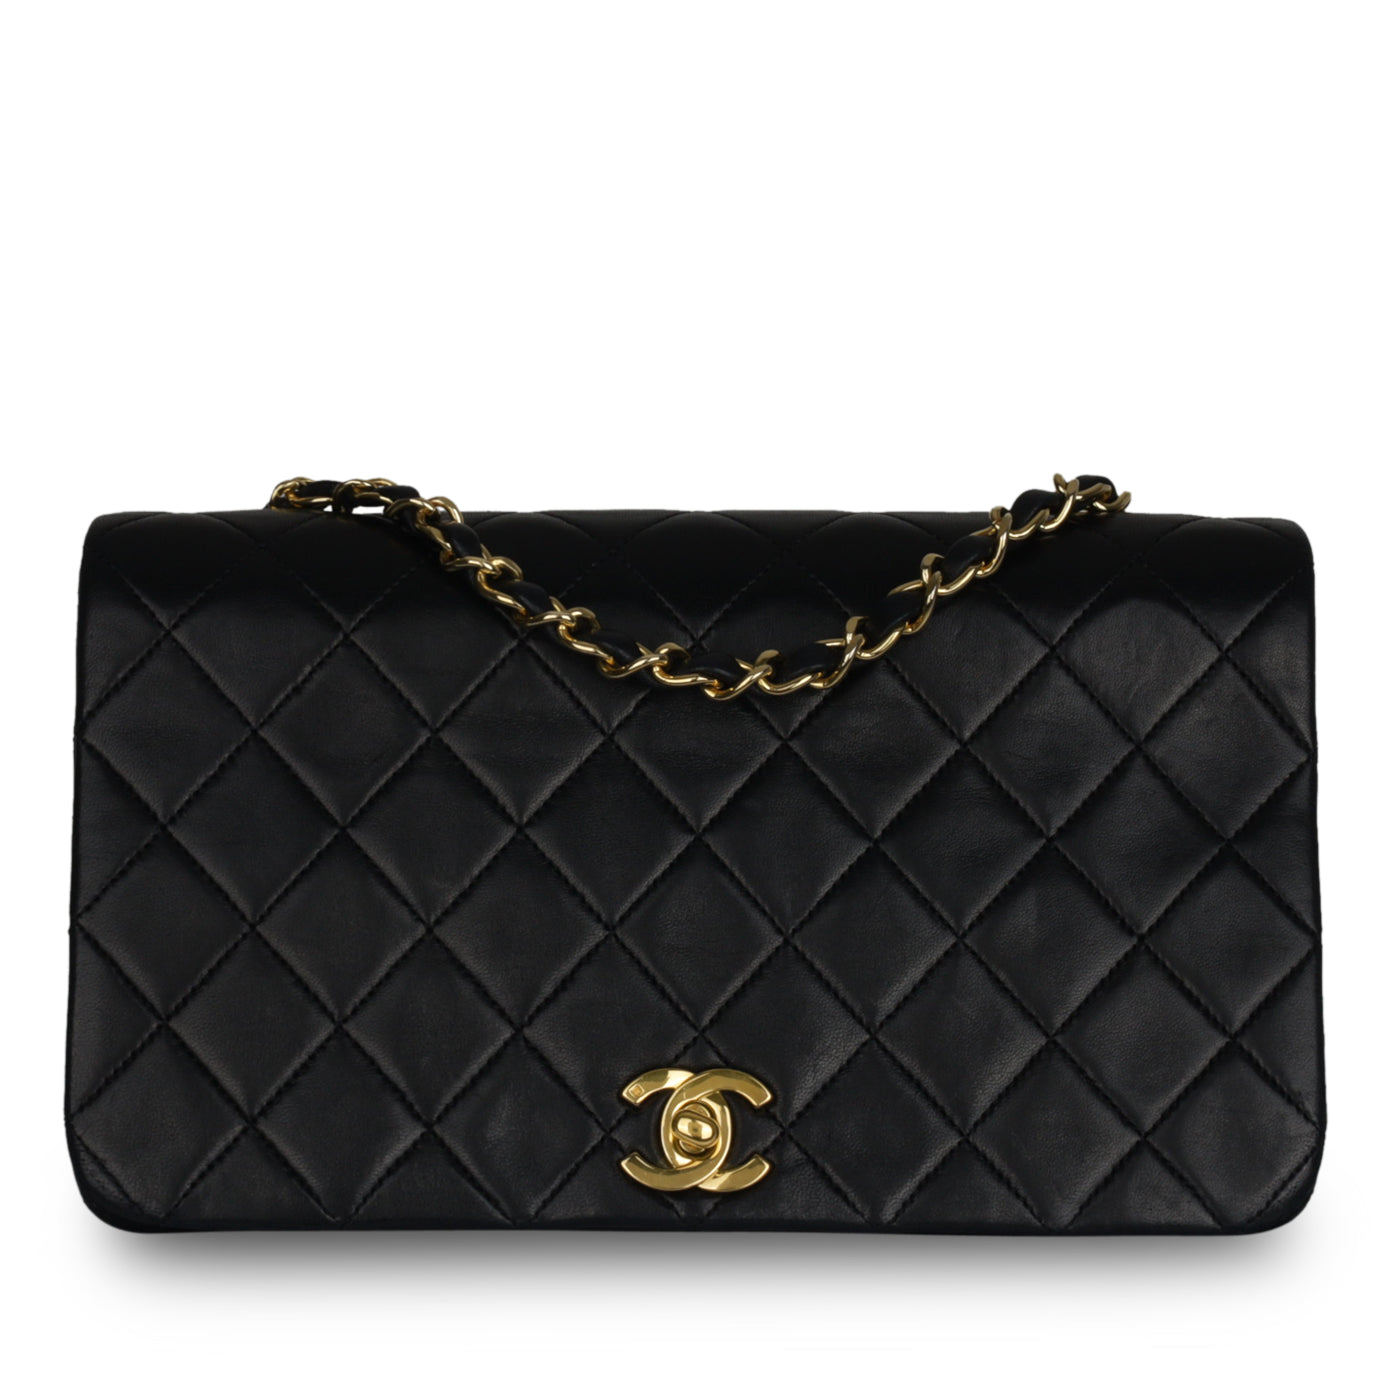 Chanel - Vintage Full Flap Bag - Black Lambskin GHW - Pre Loved